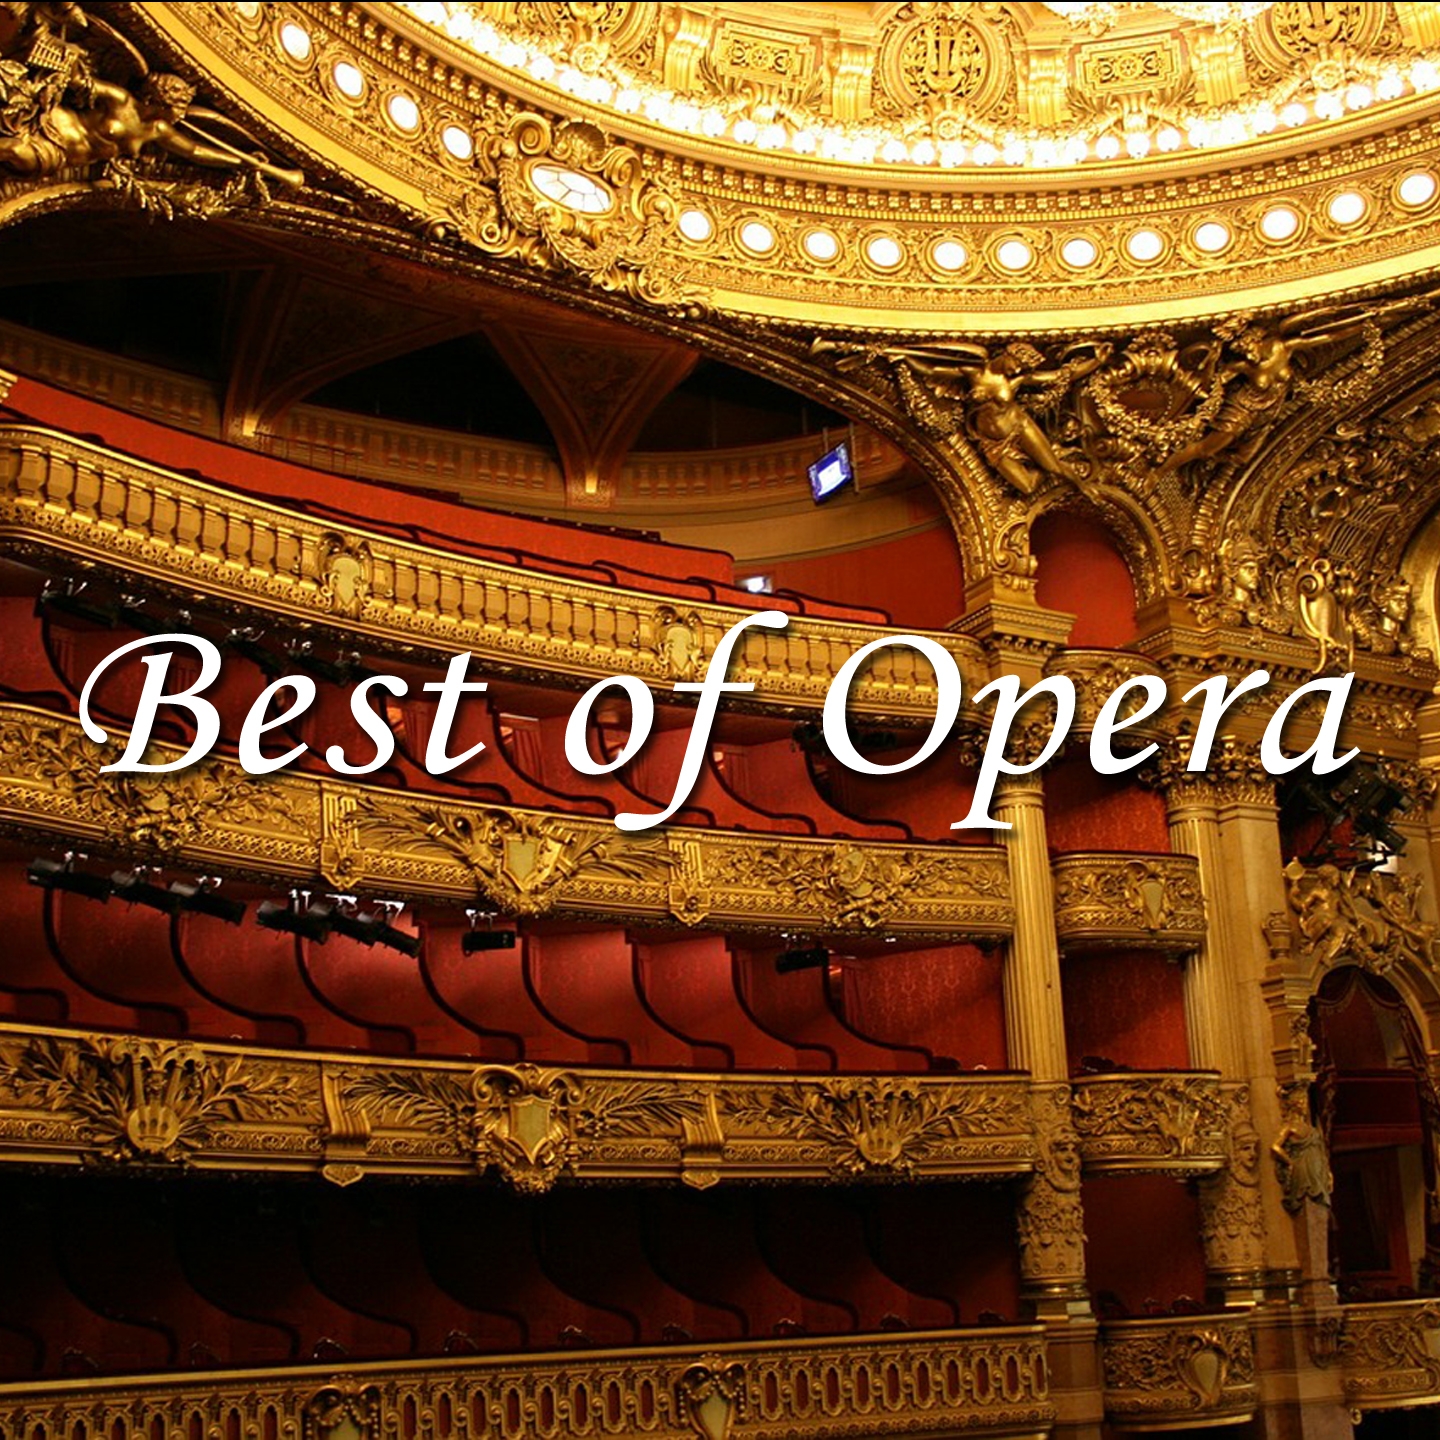 1-Best of Opera - Casta diva, Vissi d’arte, Caro nome, E lucevan le stelle, And Other 12 Track